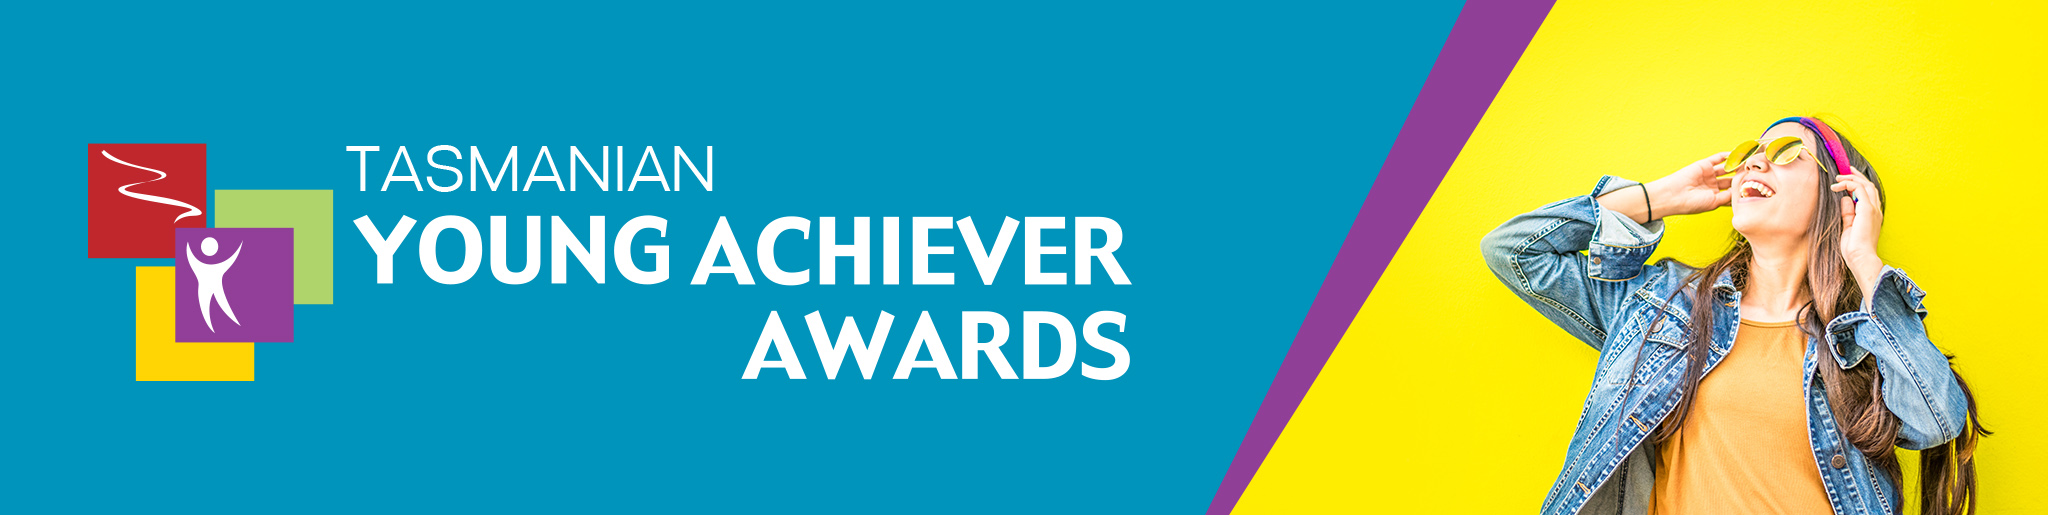 Tasmanian Young Achiever Awards